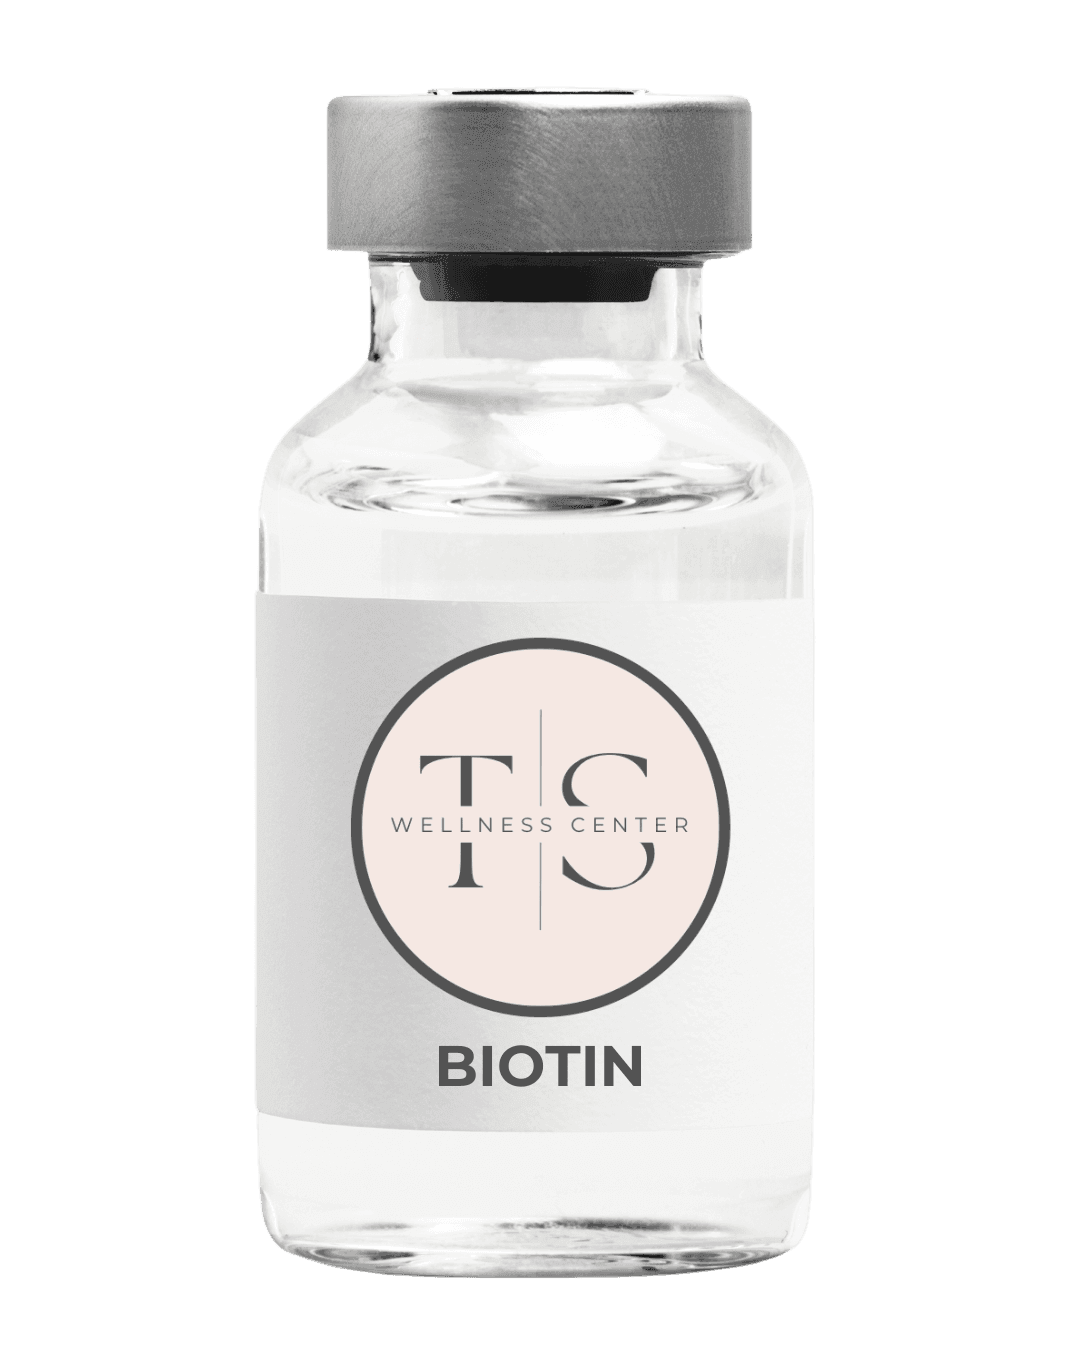 biotin (vitamin b7) injection tarpon springs wellness center 